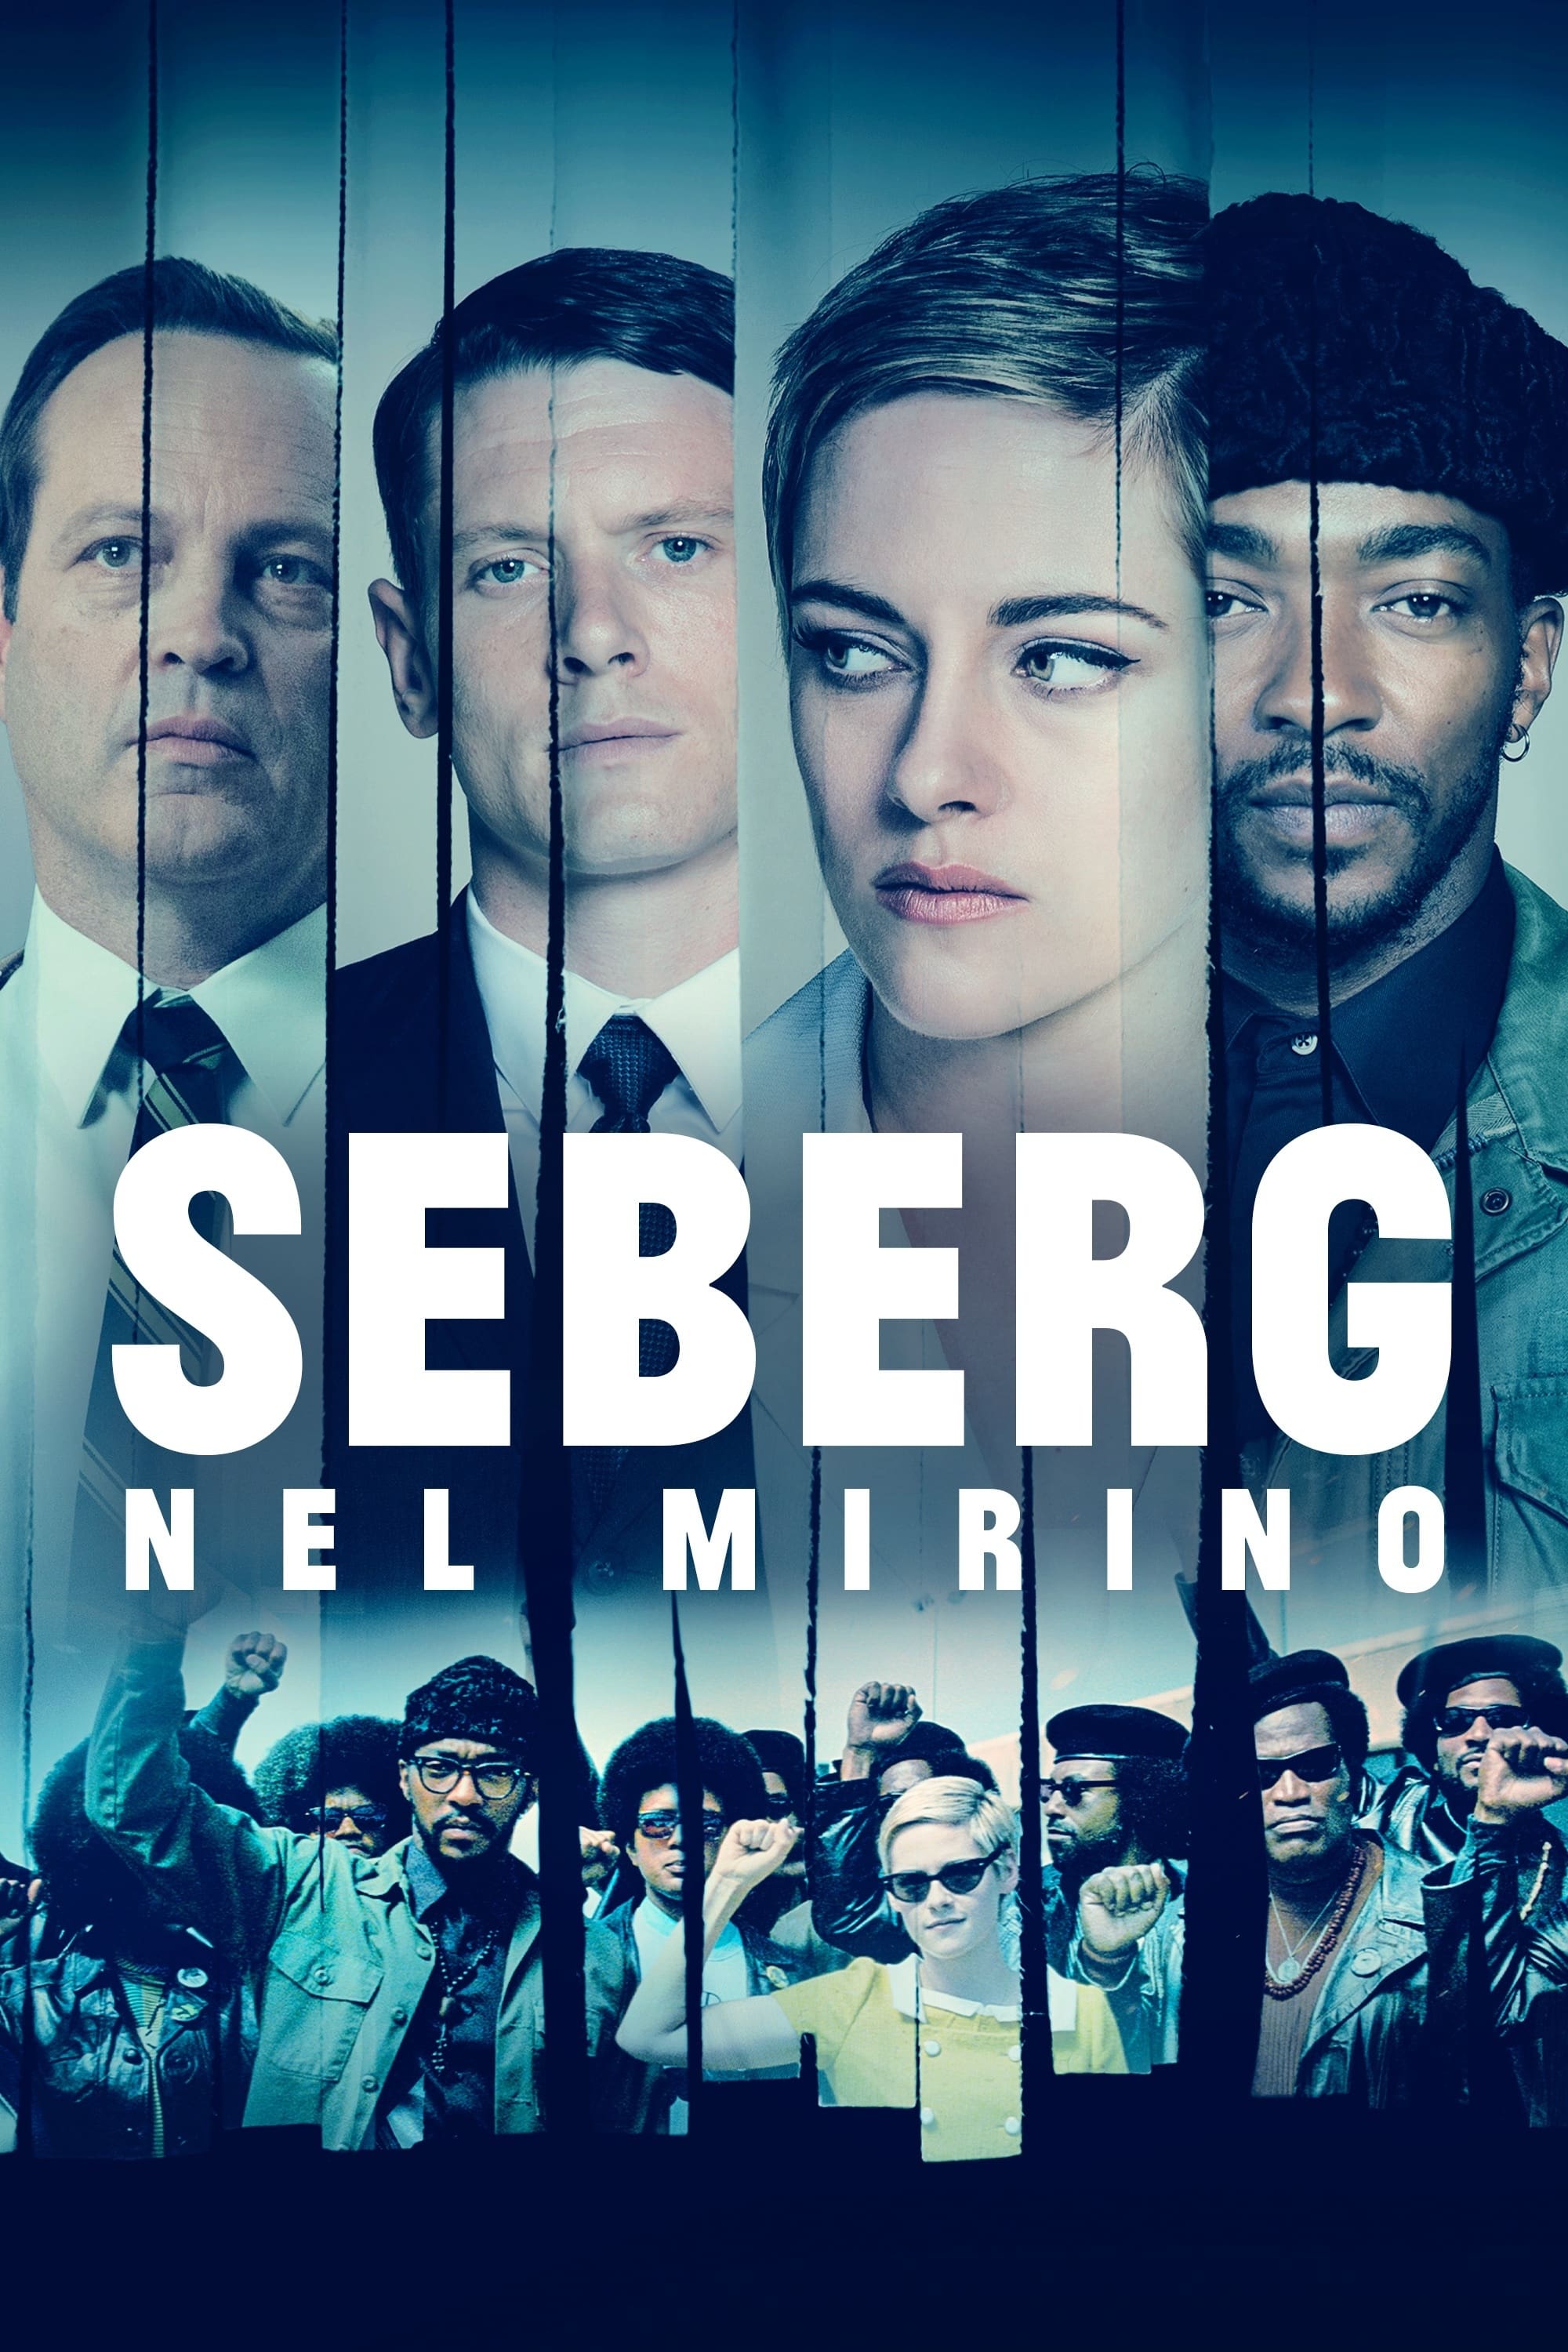 Seberg - Nel mirino film